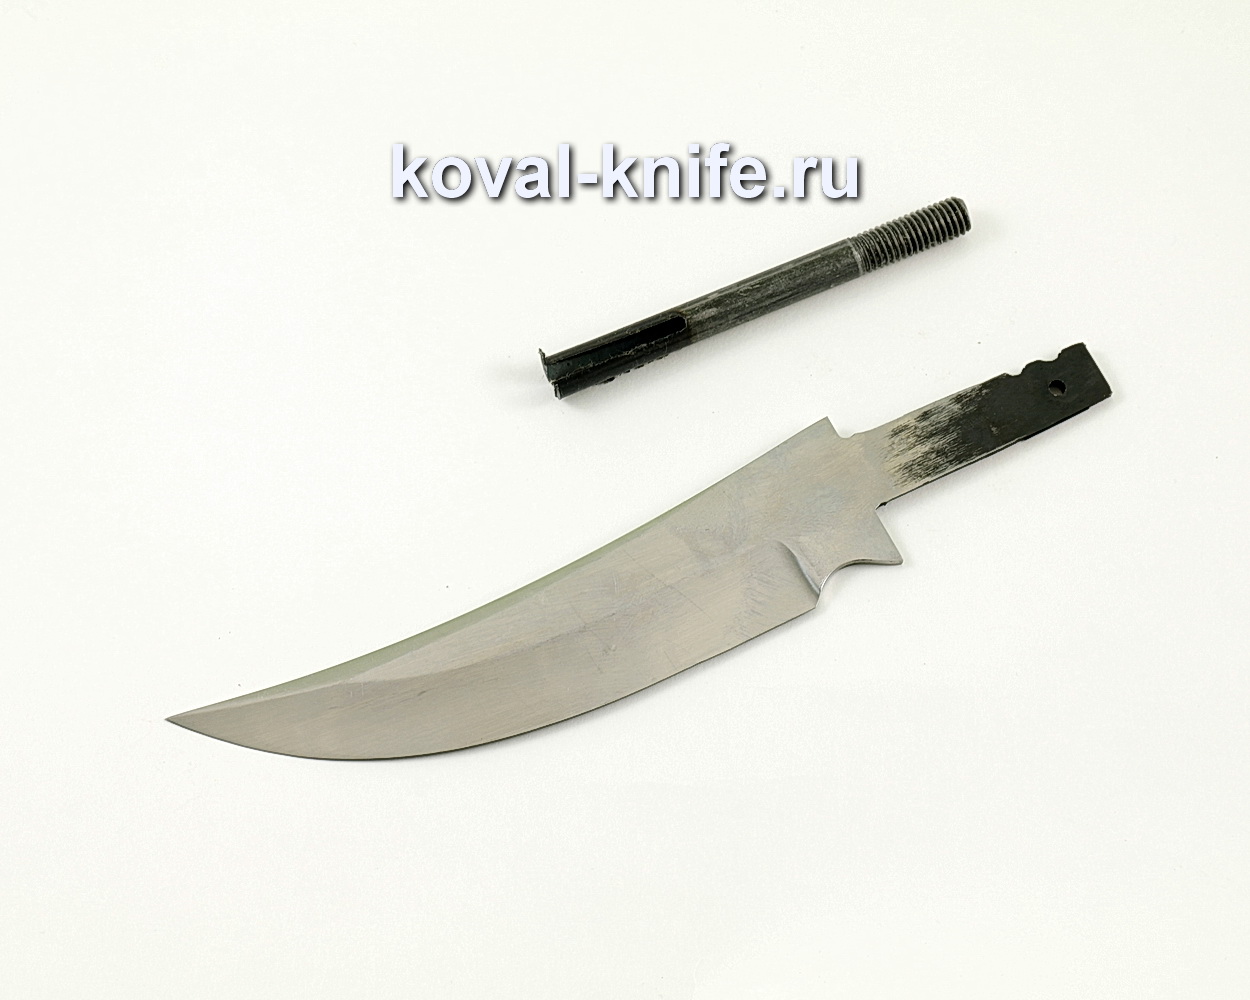 Клинок для ножа Ворон (кованая сталь 95Х18)